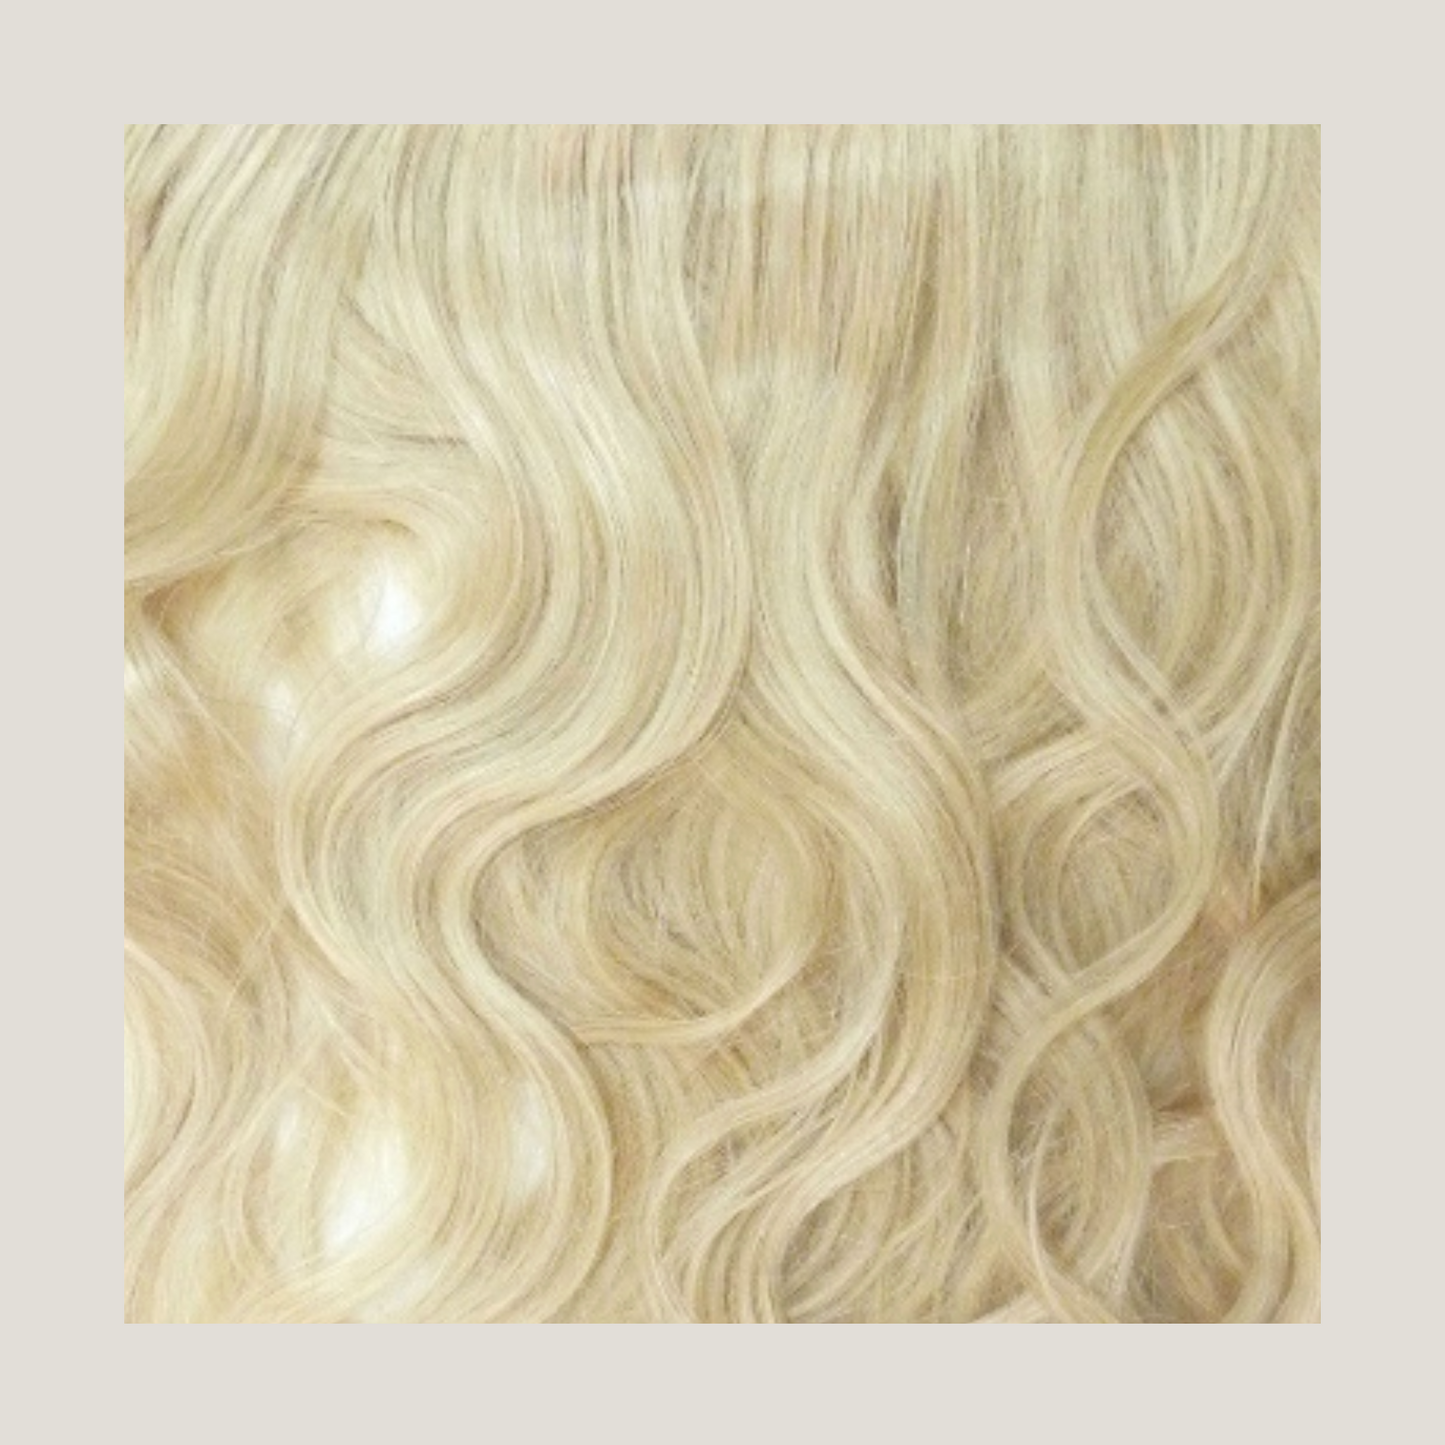 European Virgin Remy Human Hair, LA Weave, Micro Weft Extensions